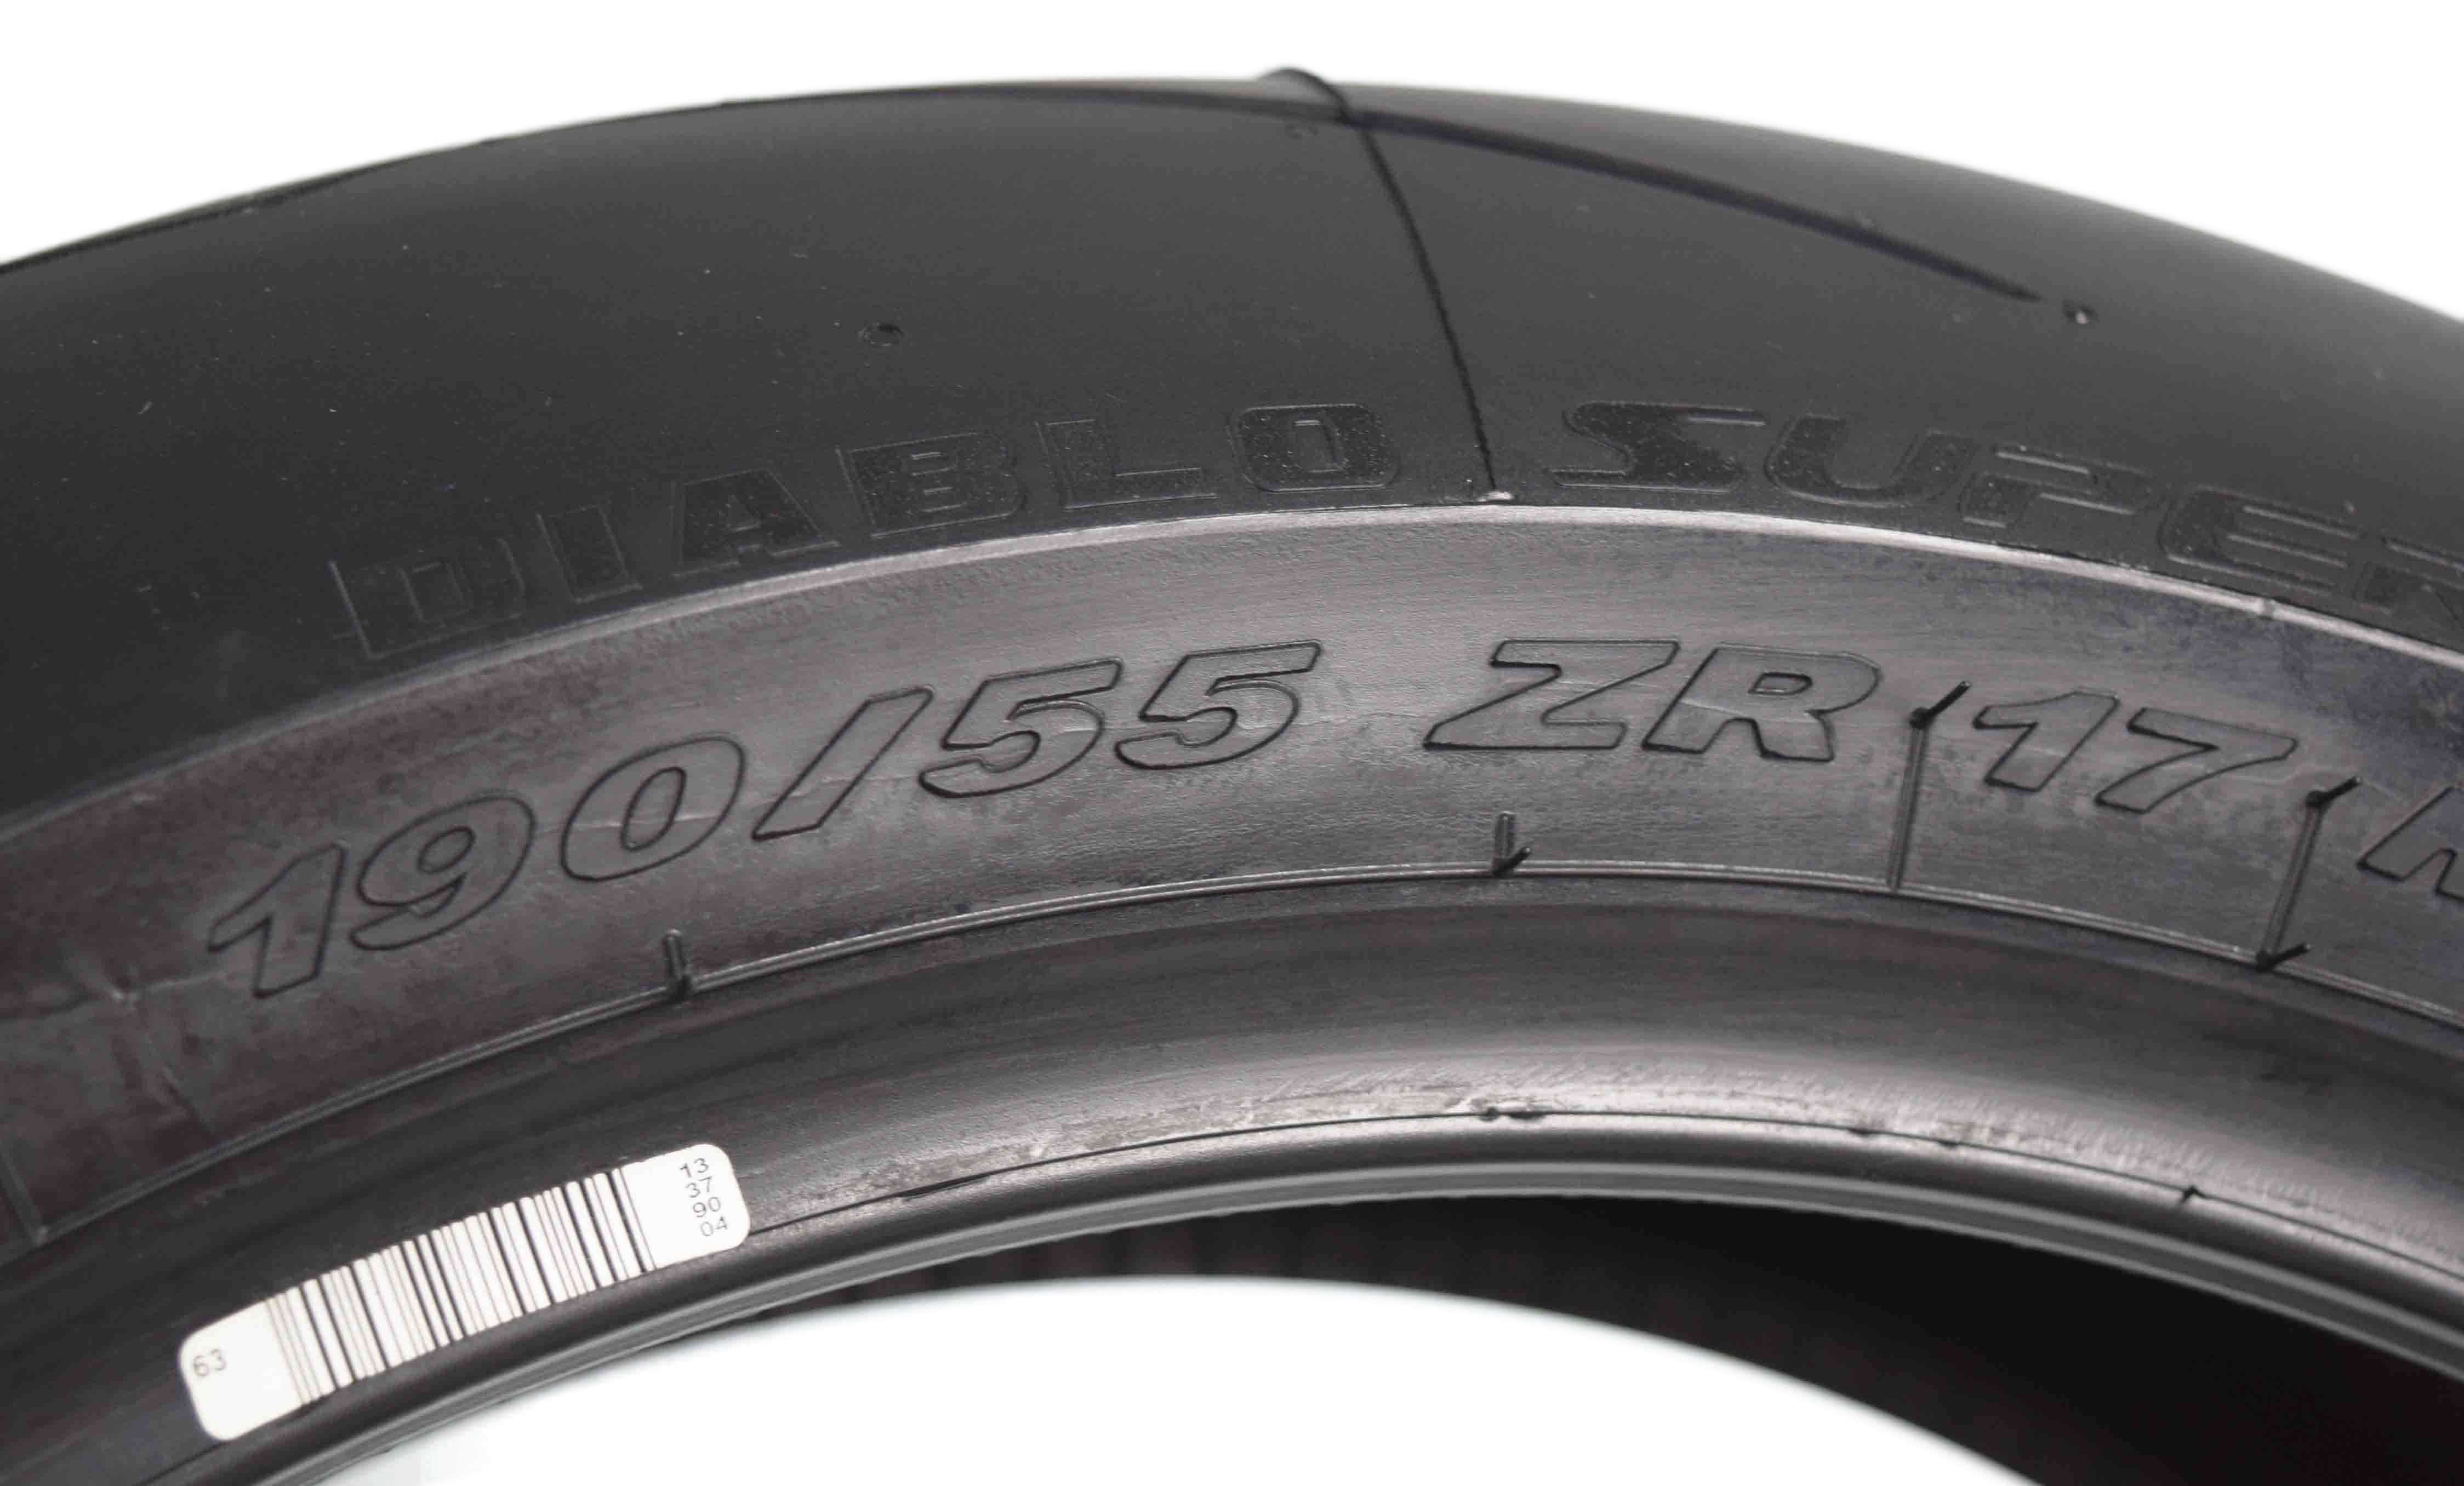 Pirelli Tire 190/55ZR17 SUPER CORSA V2 Radial Motorcycle Rear Tire 190/55-17